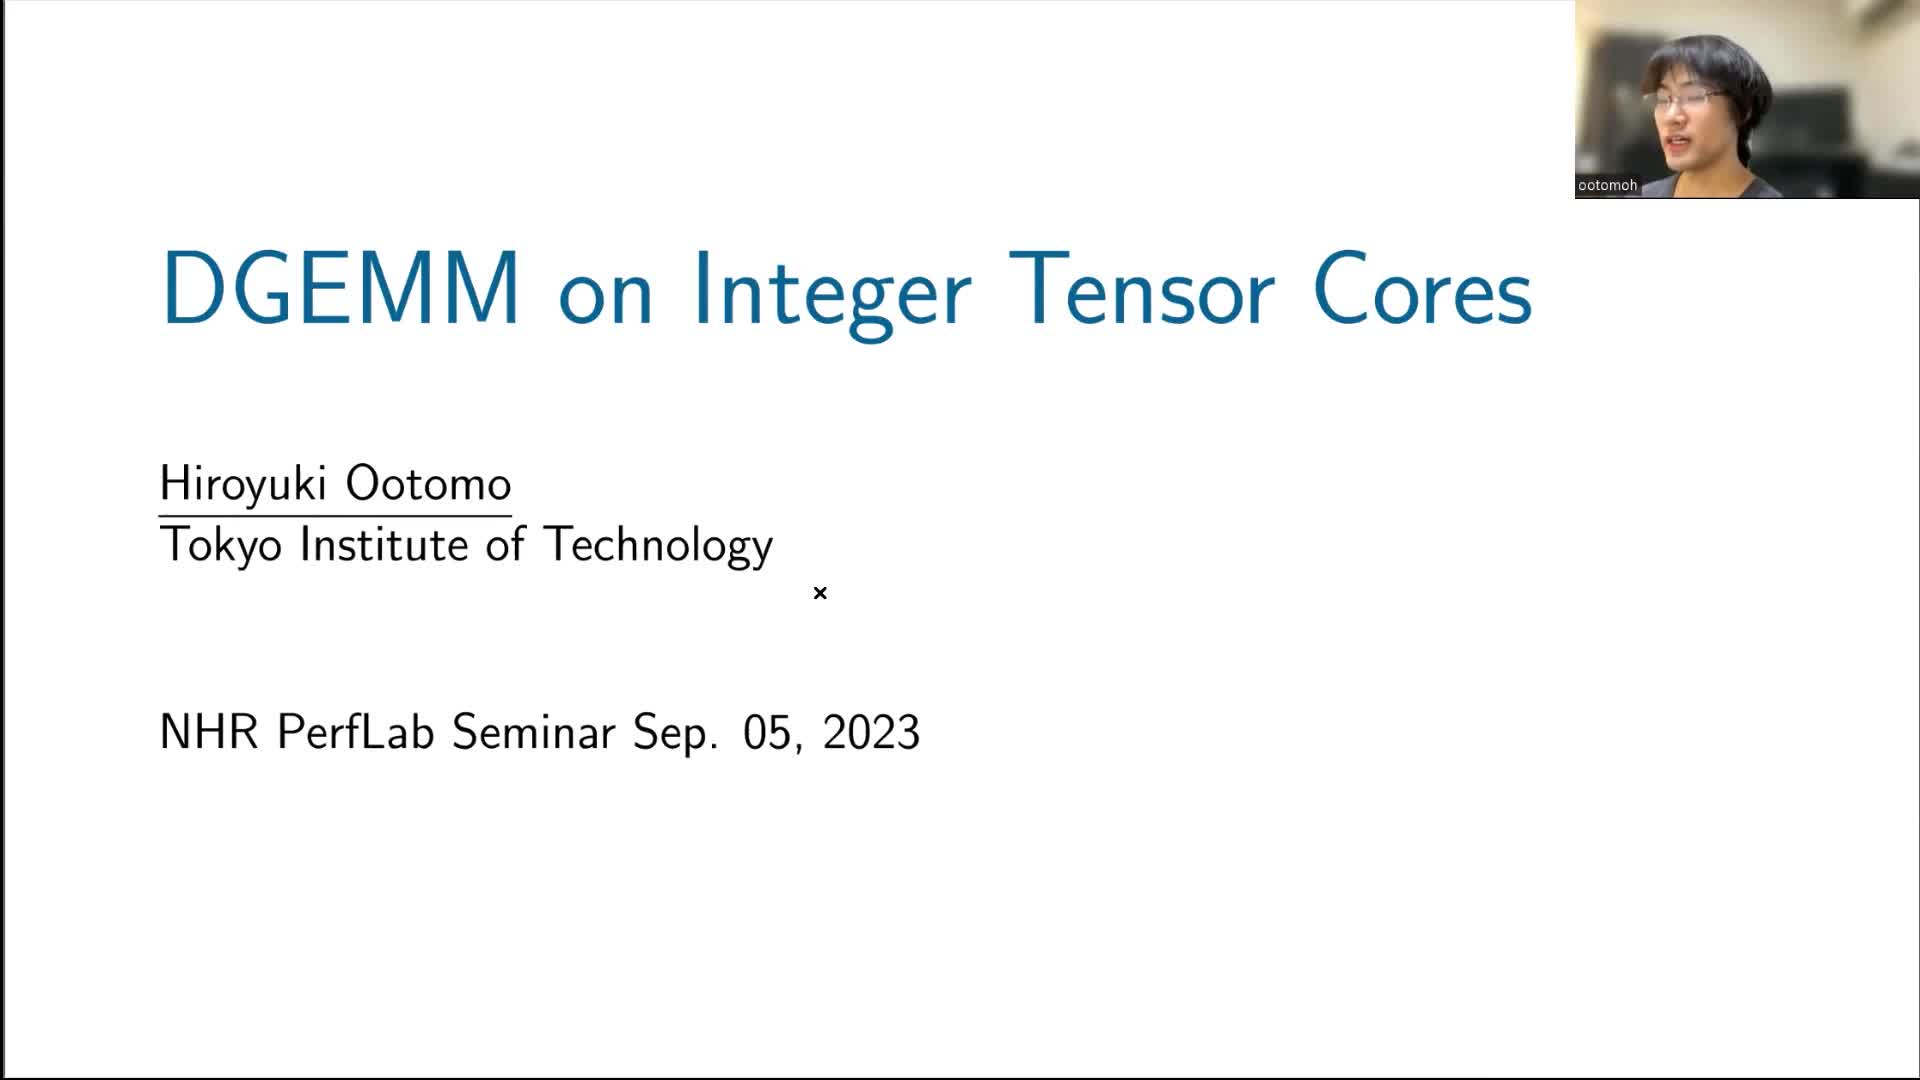 NHR PerfLab Seminar 2023-09-05: DGEMM on Integer Tensor Cores preview image